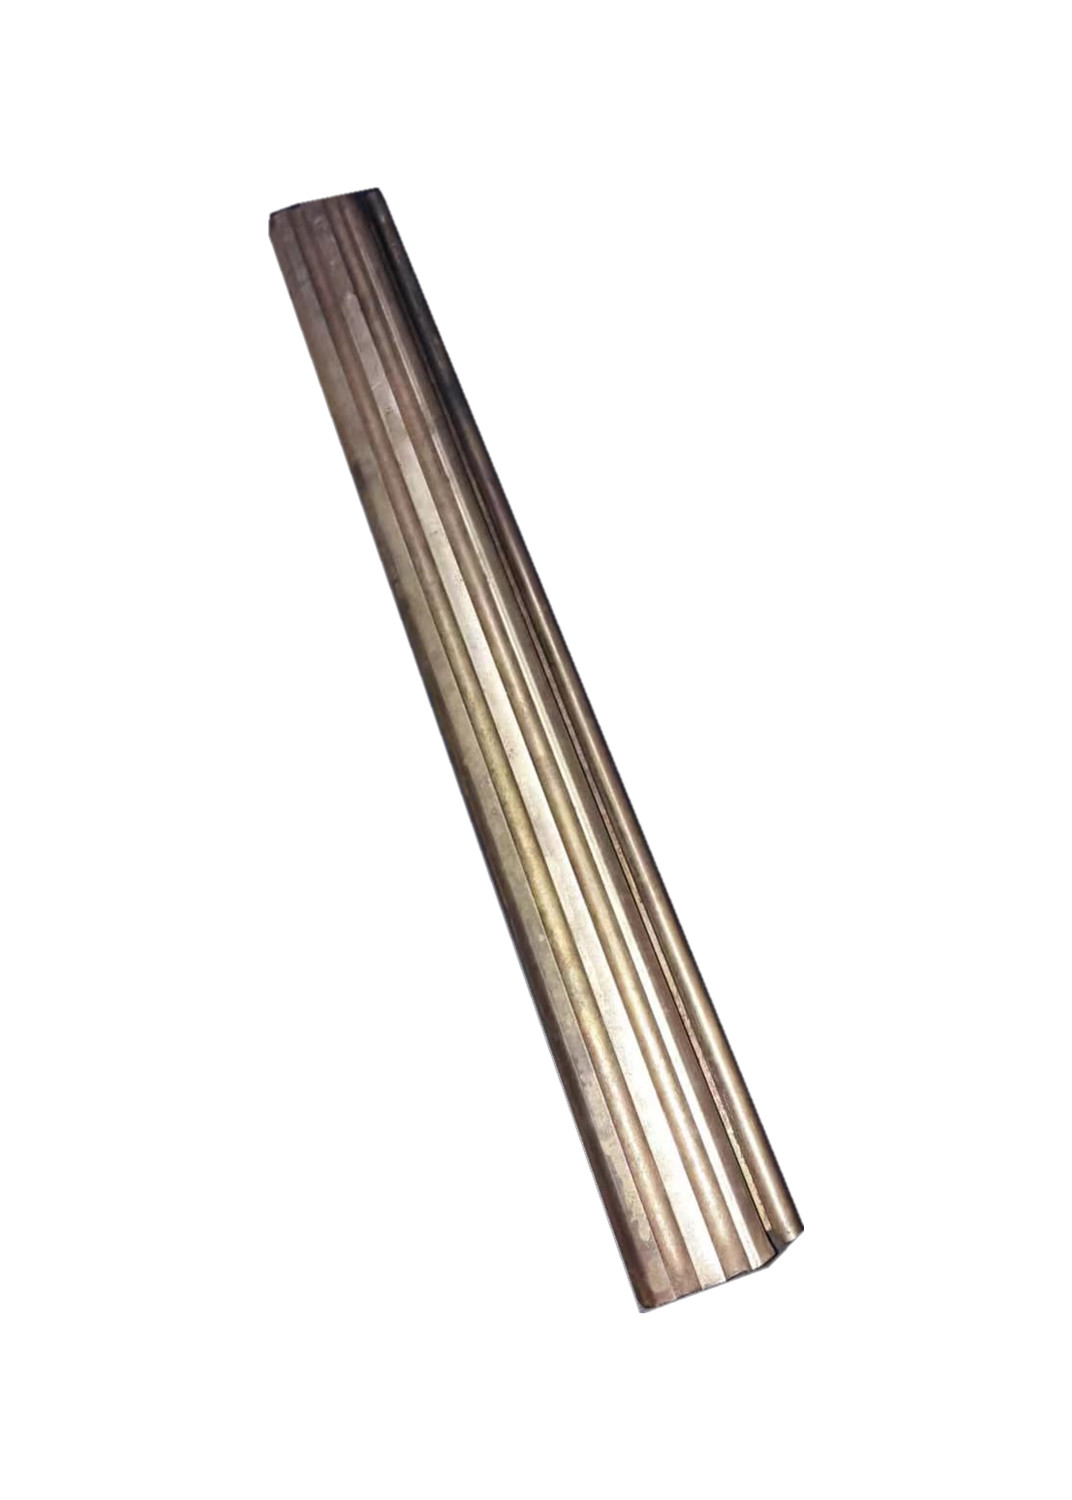 Manganin Copper Material Chain Link 1KTD173 For Hauni Cigarette Making Machine